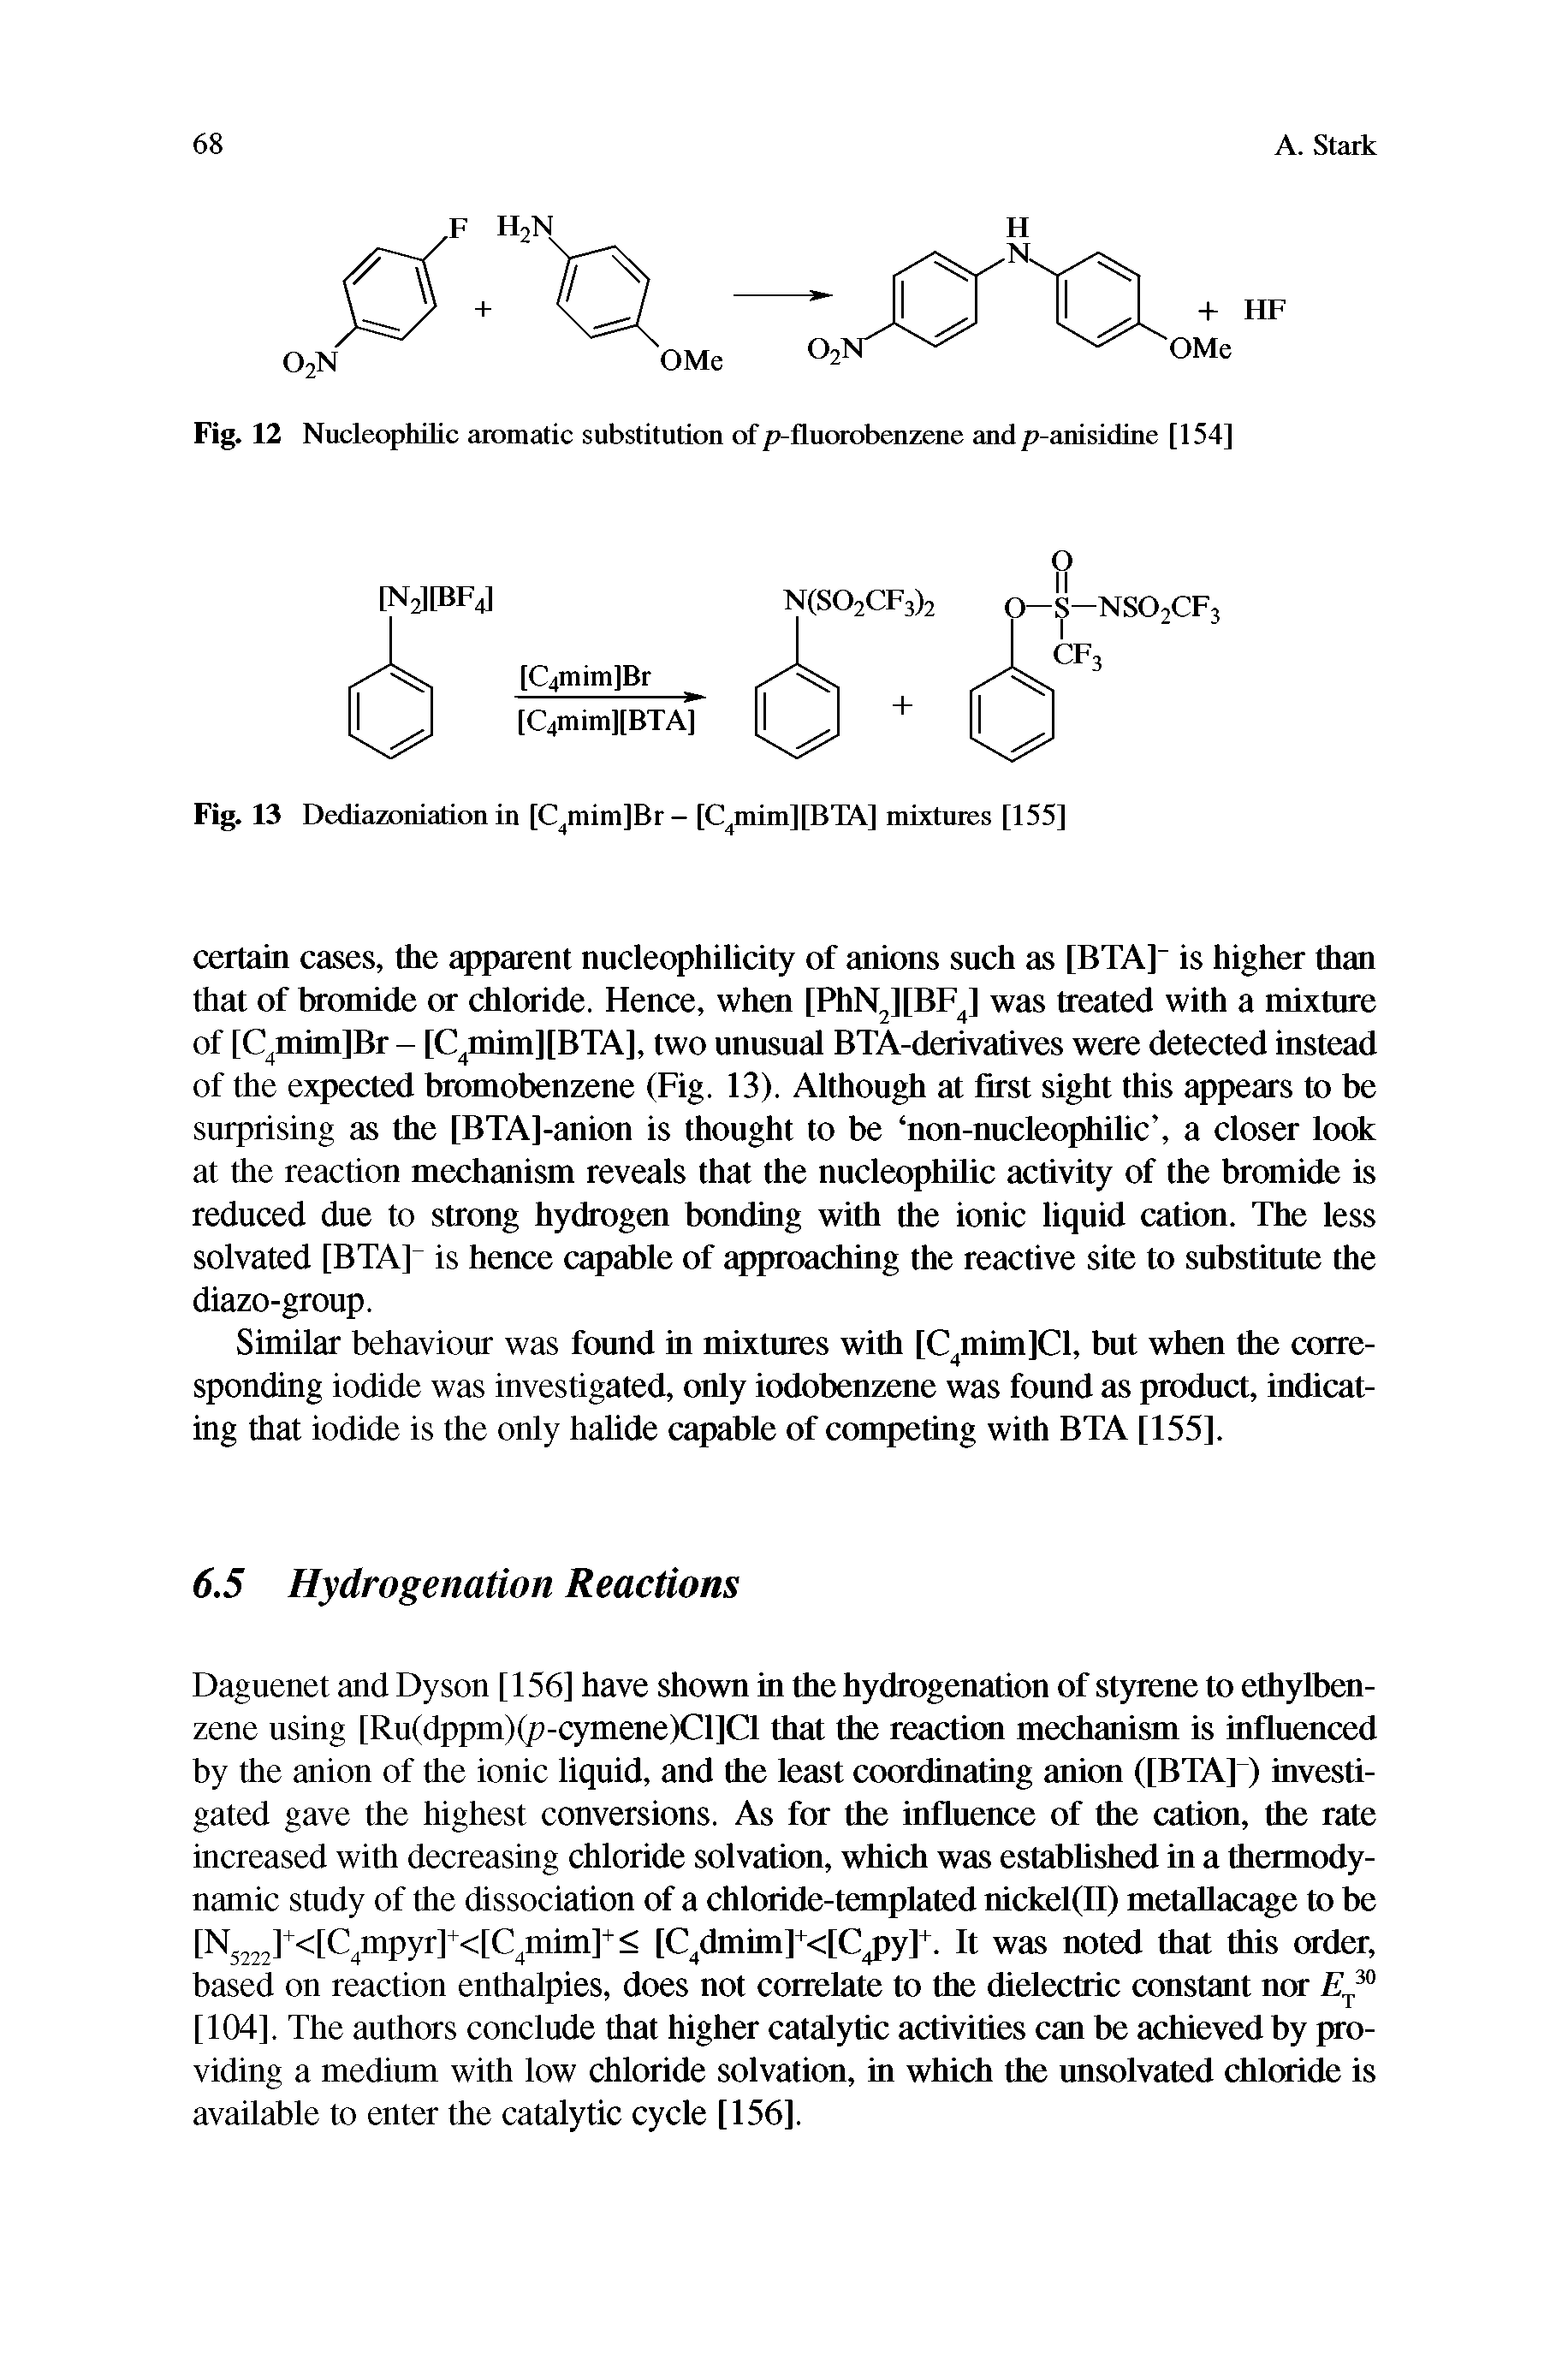 Fig. 12 Nucleophilic aromatic substitution of p-fluorobenzene andp-anisidinc [154]...